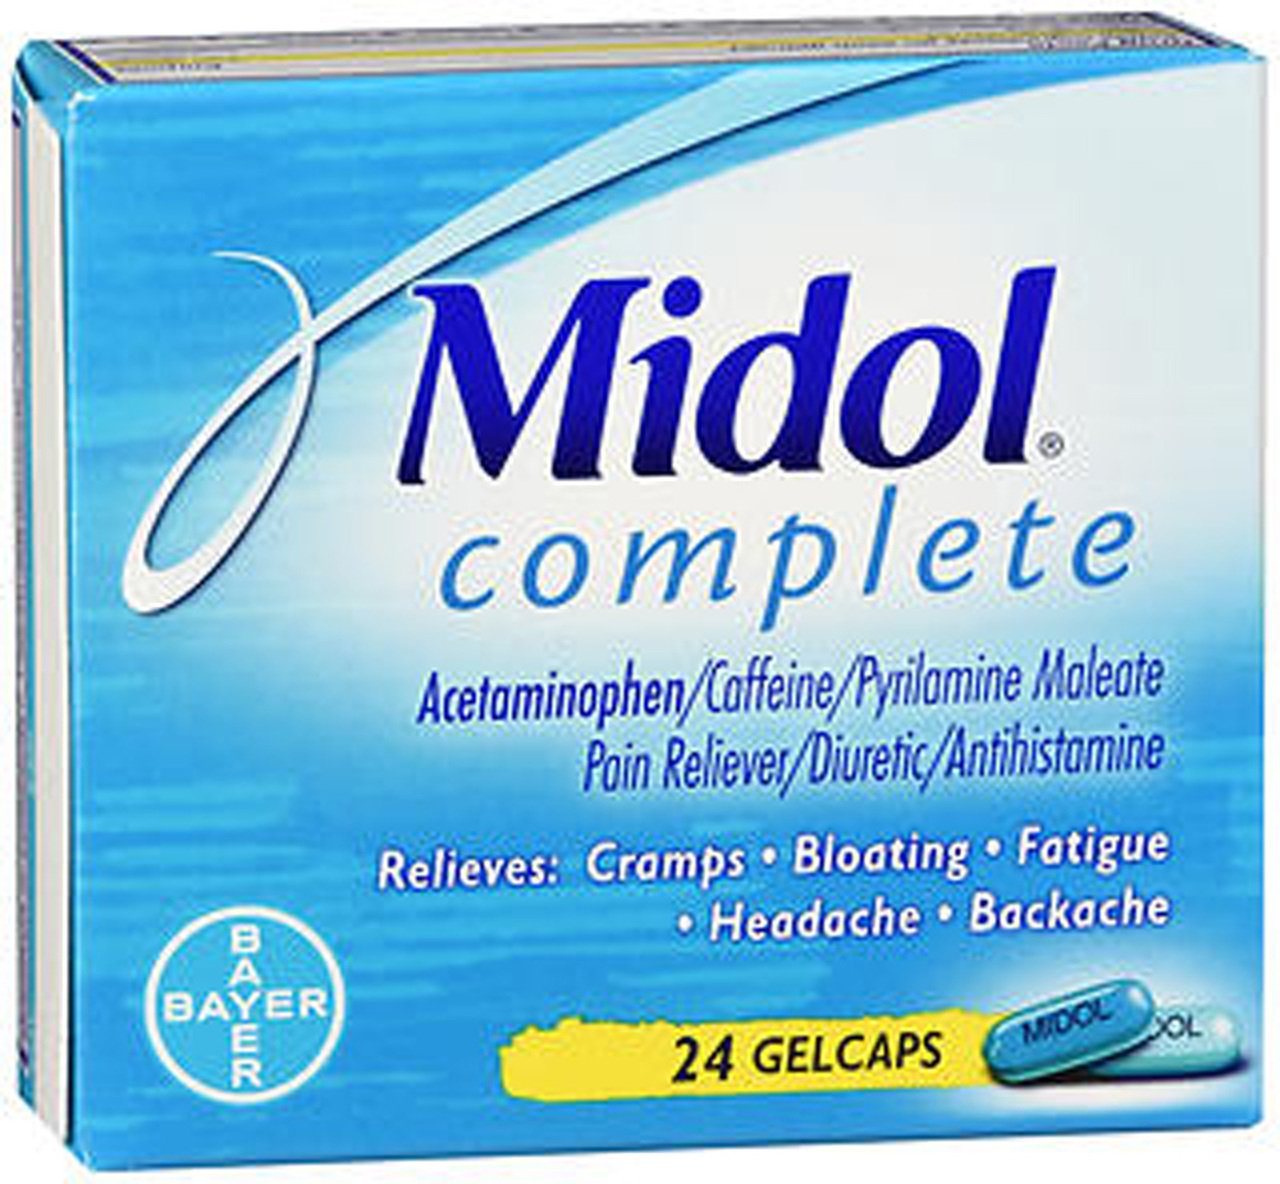 Midol Complete Pain Reliever/Diuretic/Antihistamine